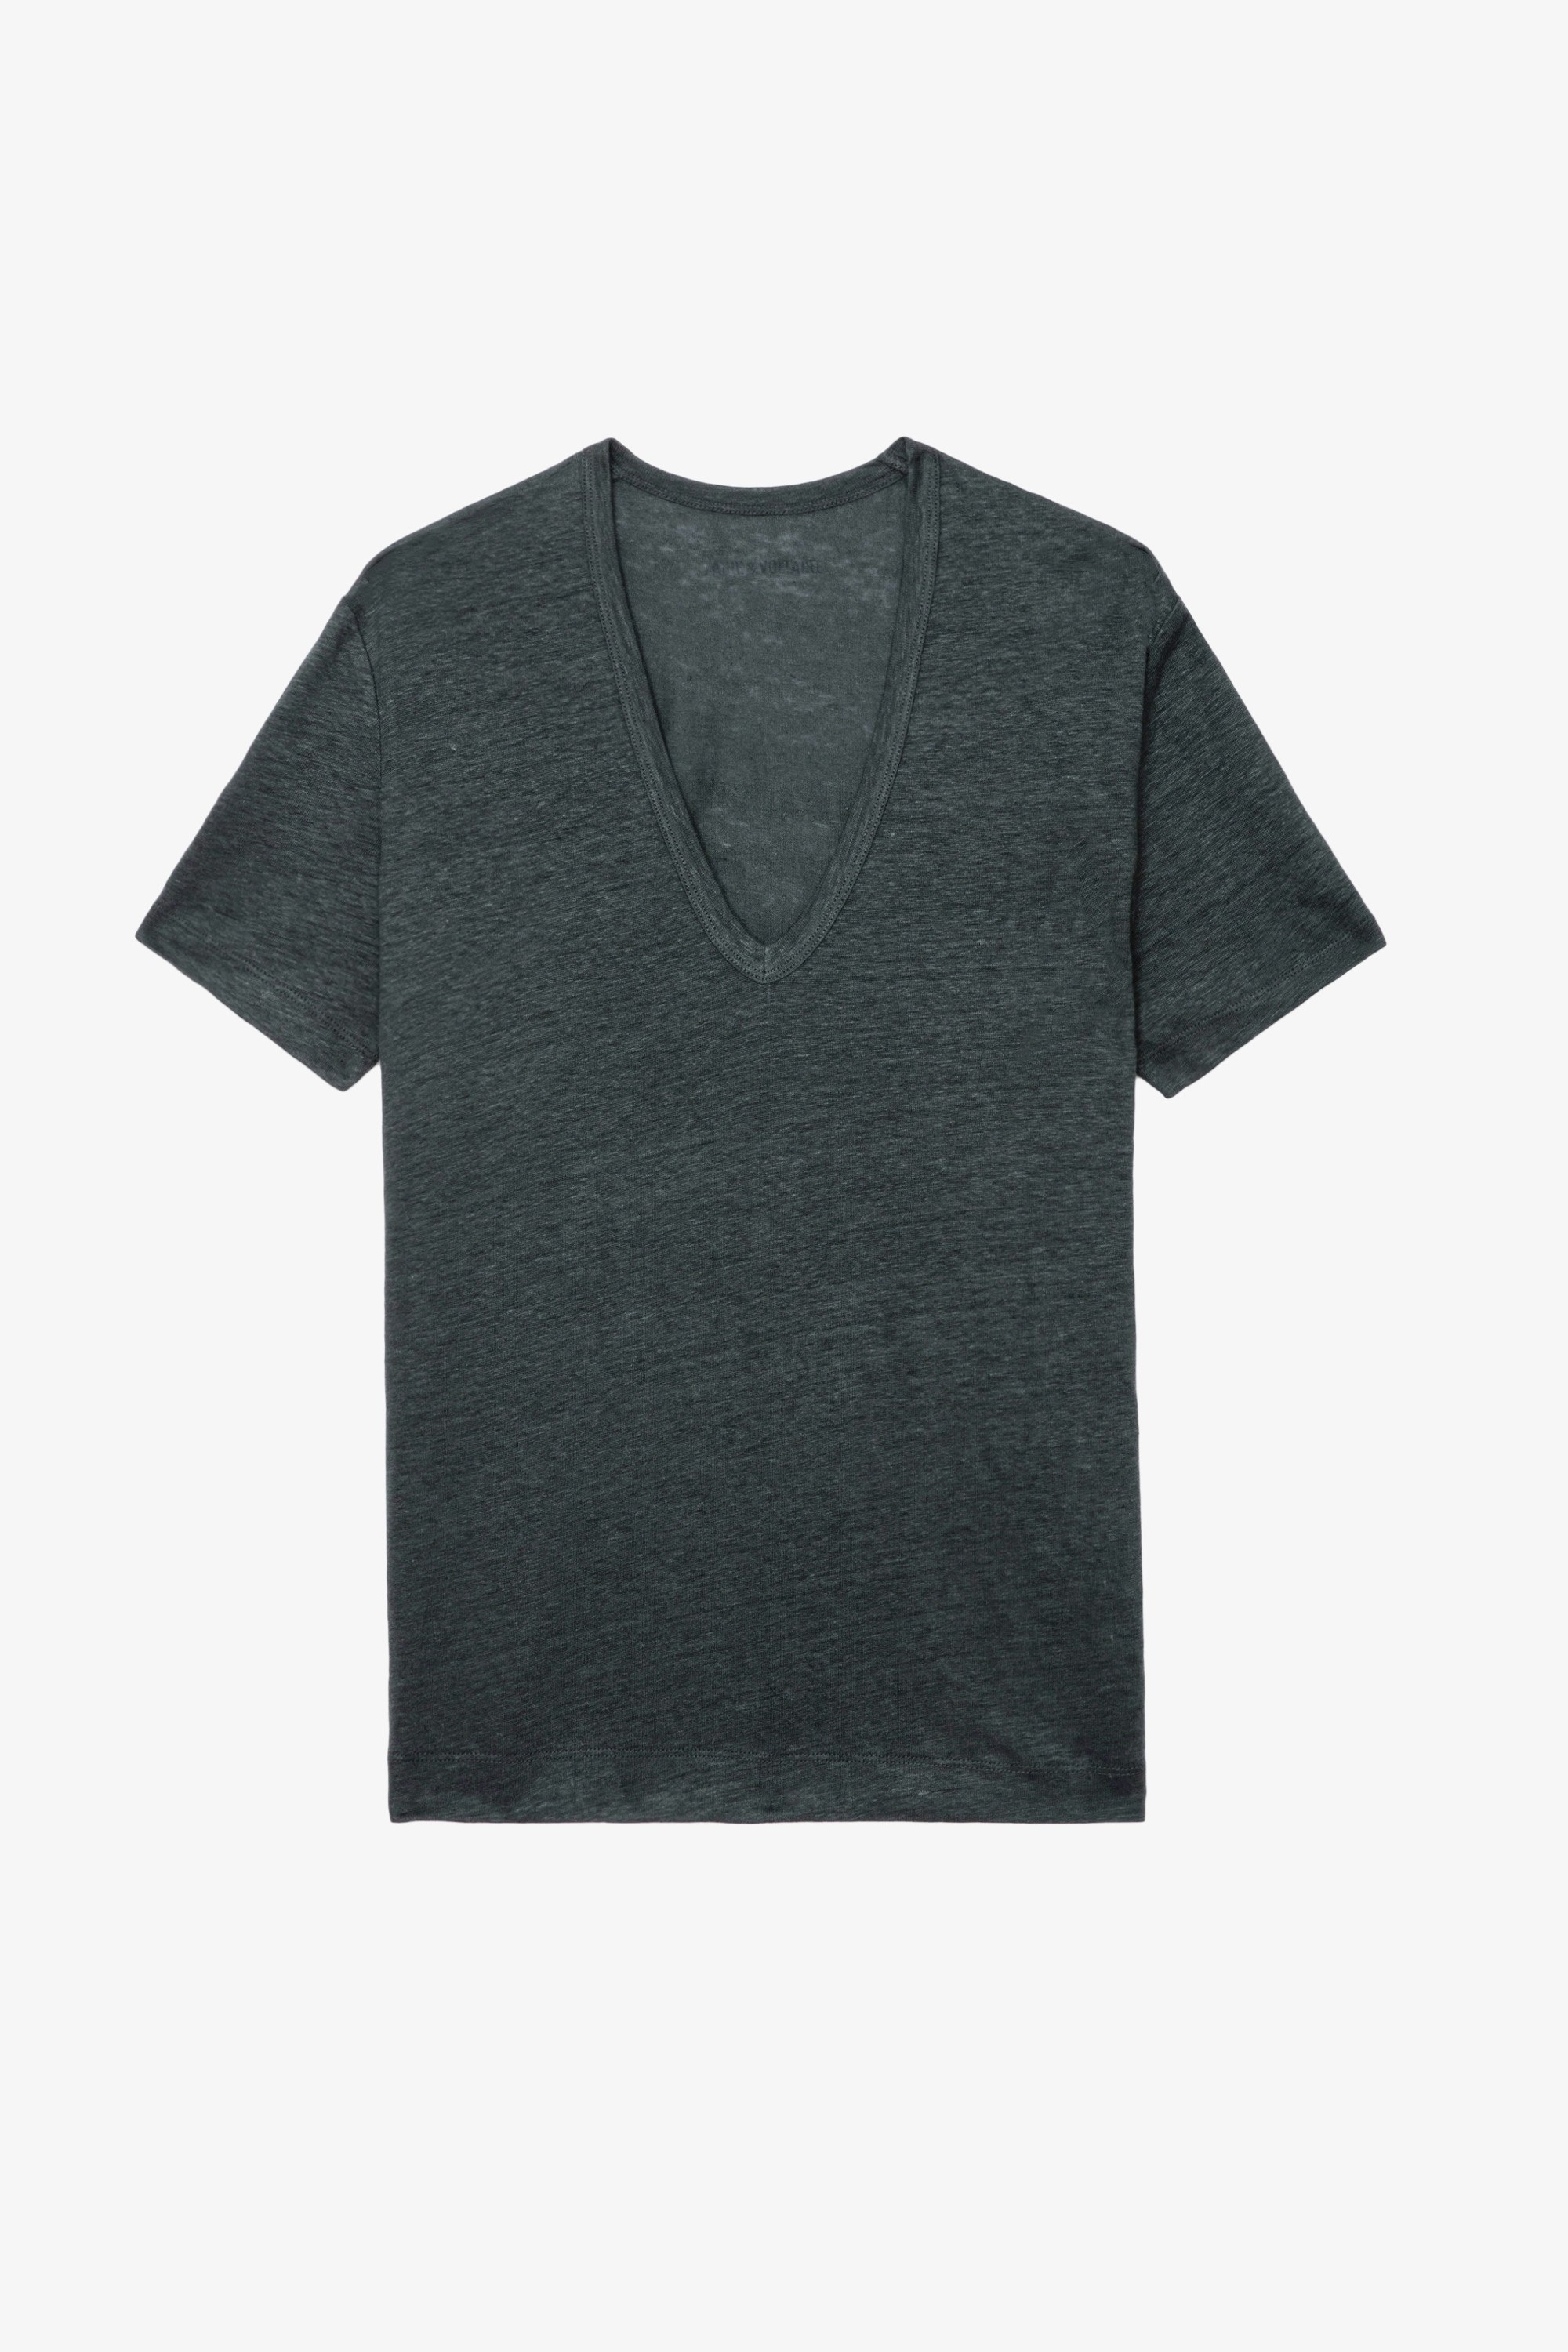 Wassa Linen T-shirt - Dark grey organic linen T-shirt with V neckline and short sleeves.